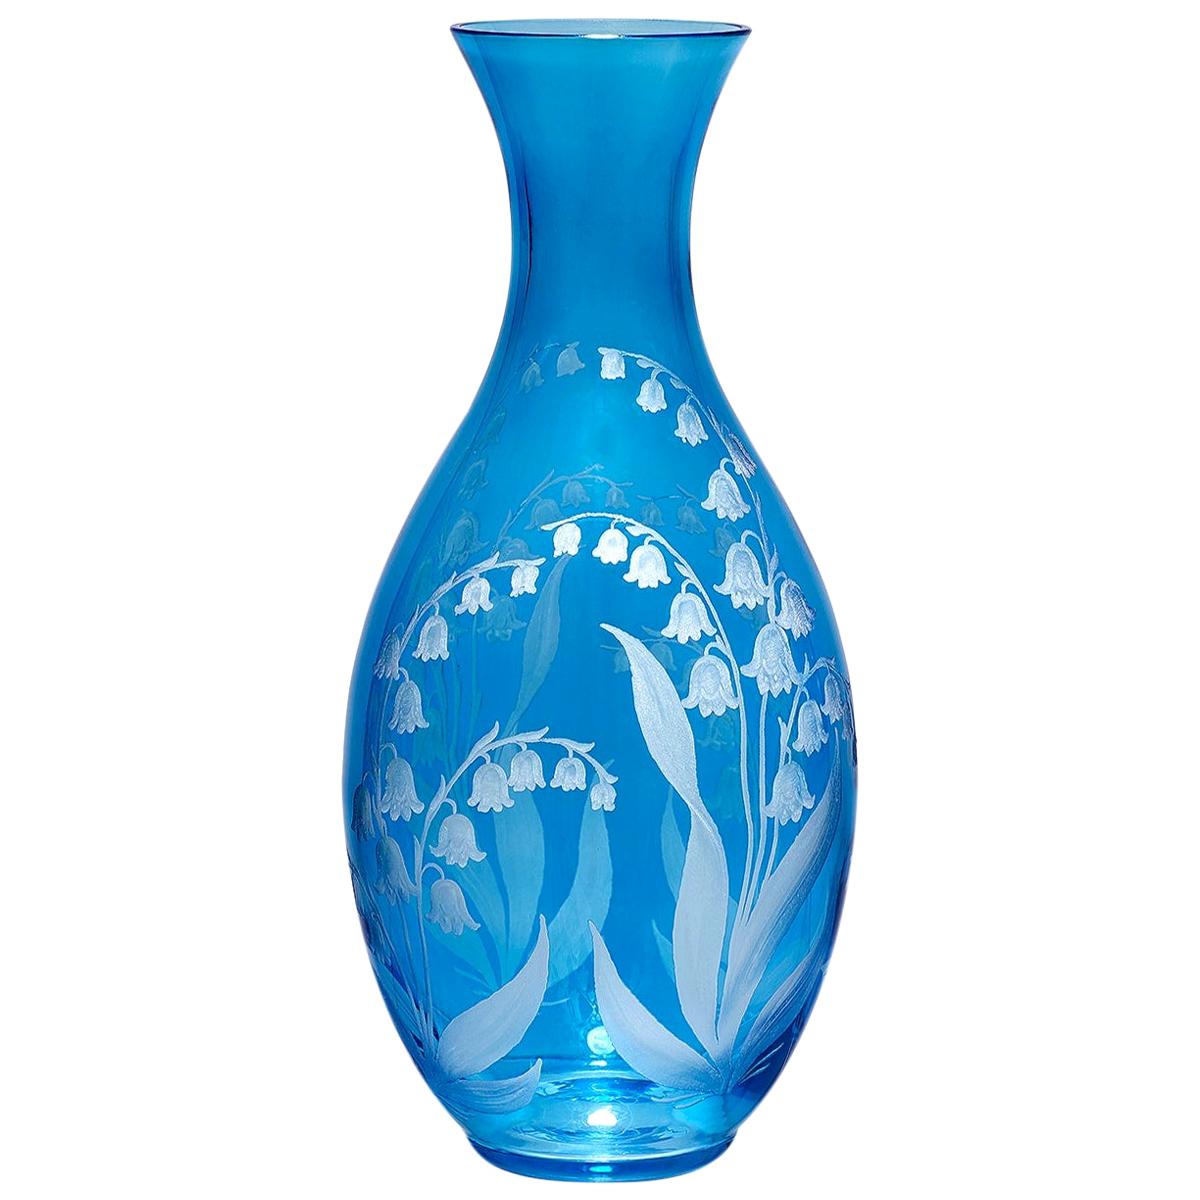 Carafe en cristal allemande de style rustique Bleu Sofina Boutique Kitzbuehel